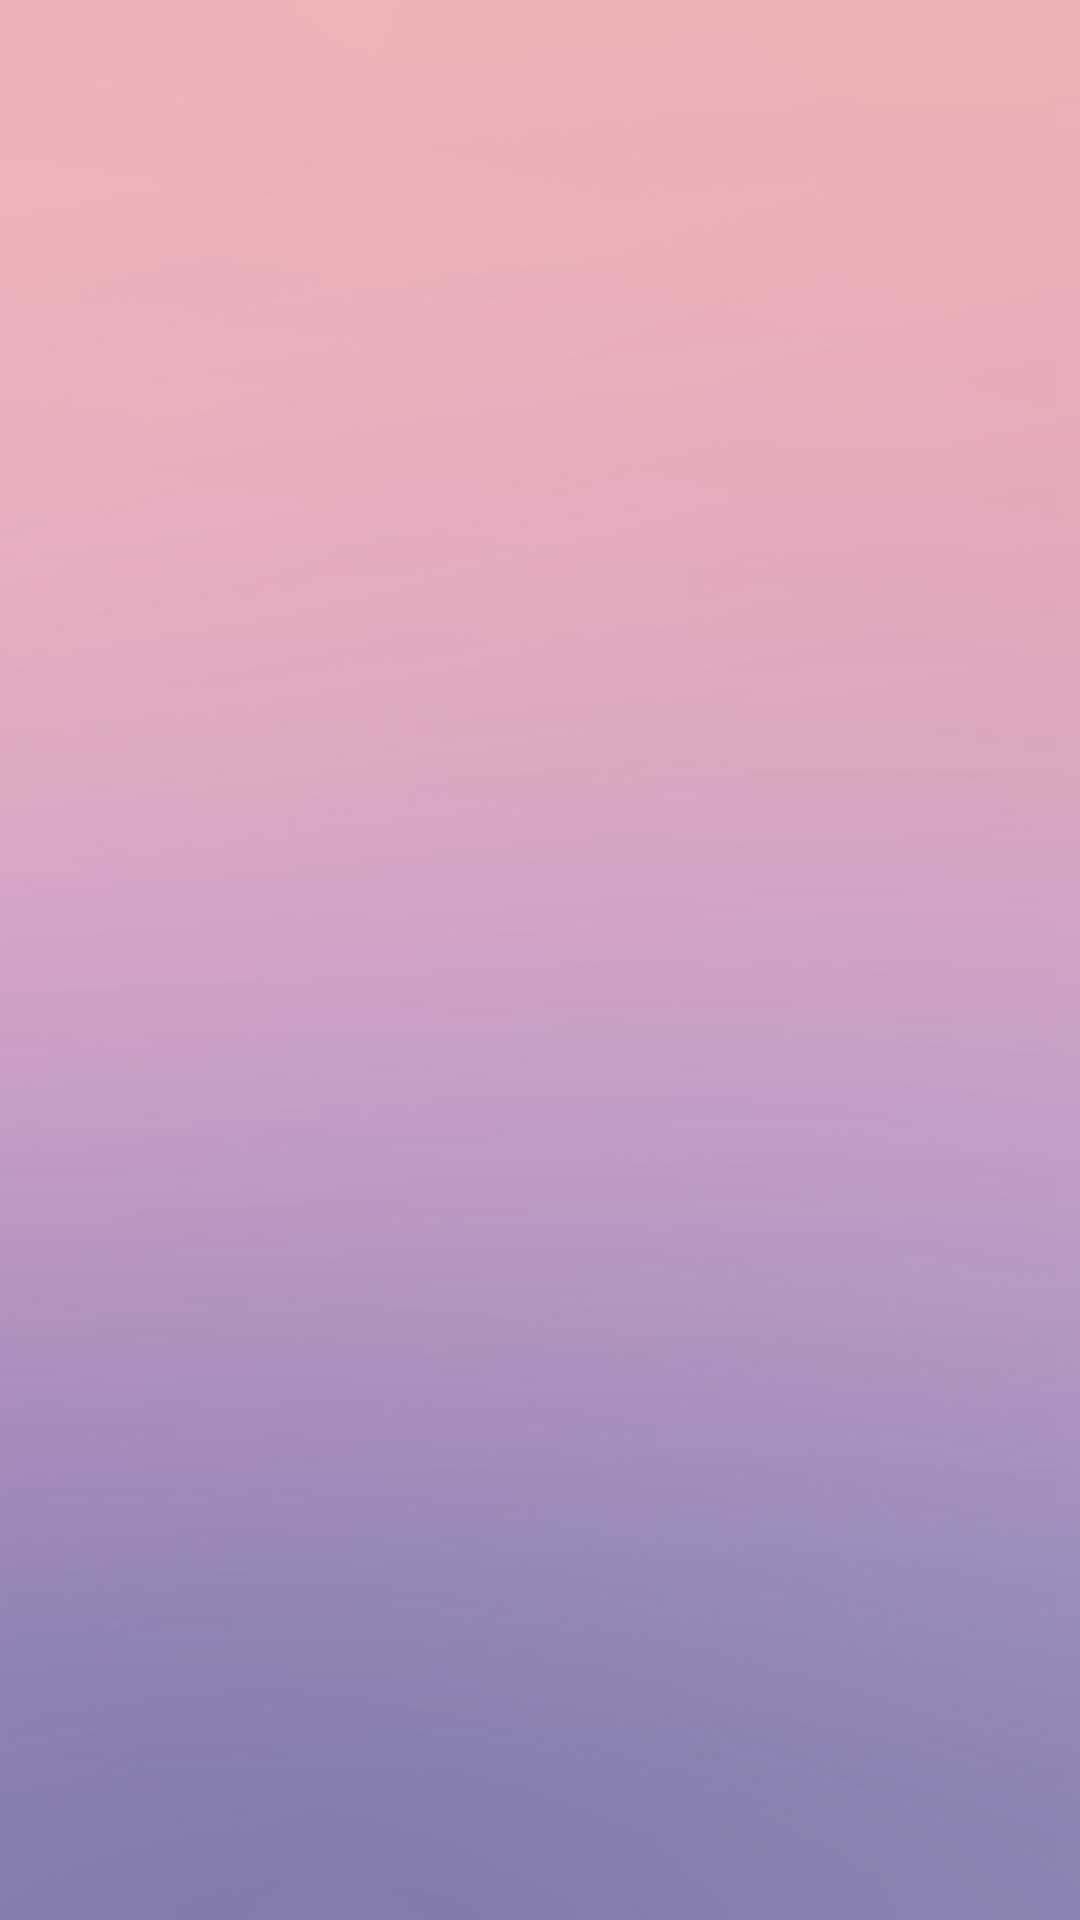 Dilip on Twitter pink to blue Ombre Wallpaper mac published on Desktop  Wallpapers  httpstcoCZDt0andZn httpstcoze7OEuxQpH  Twitter